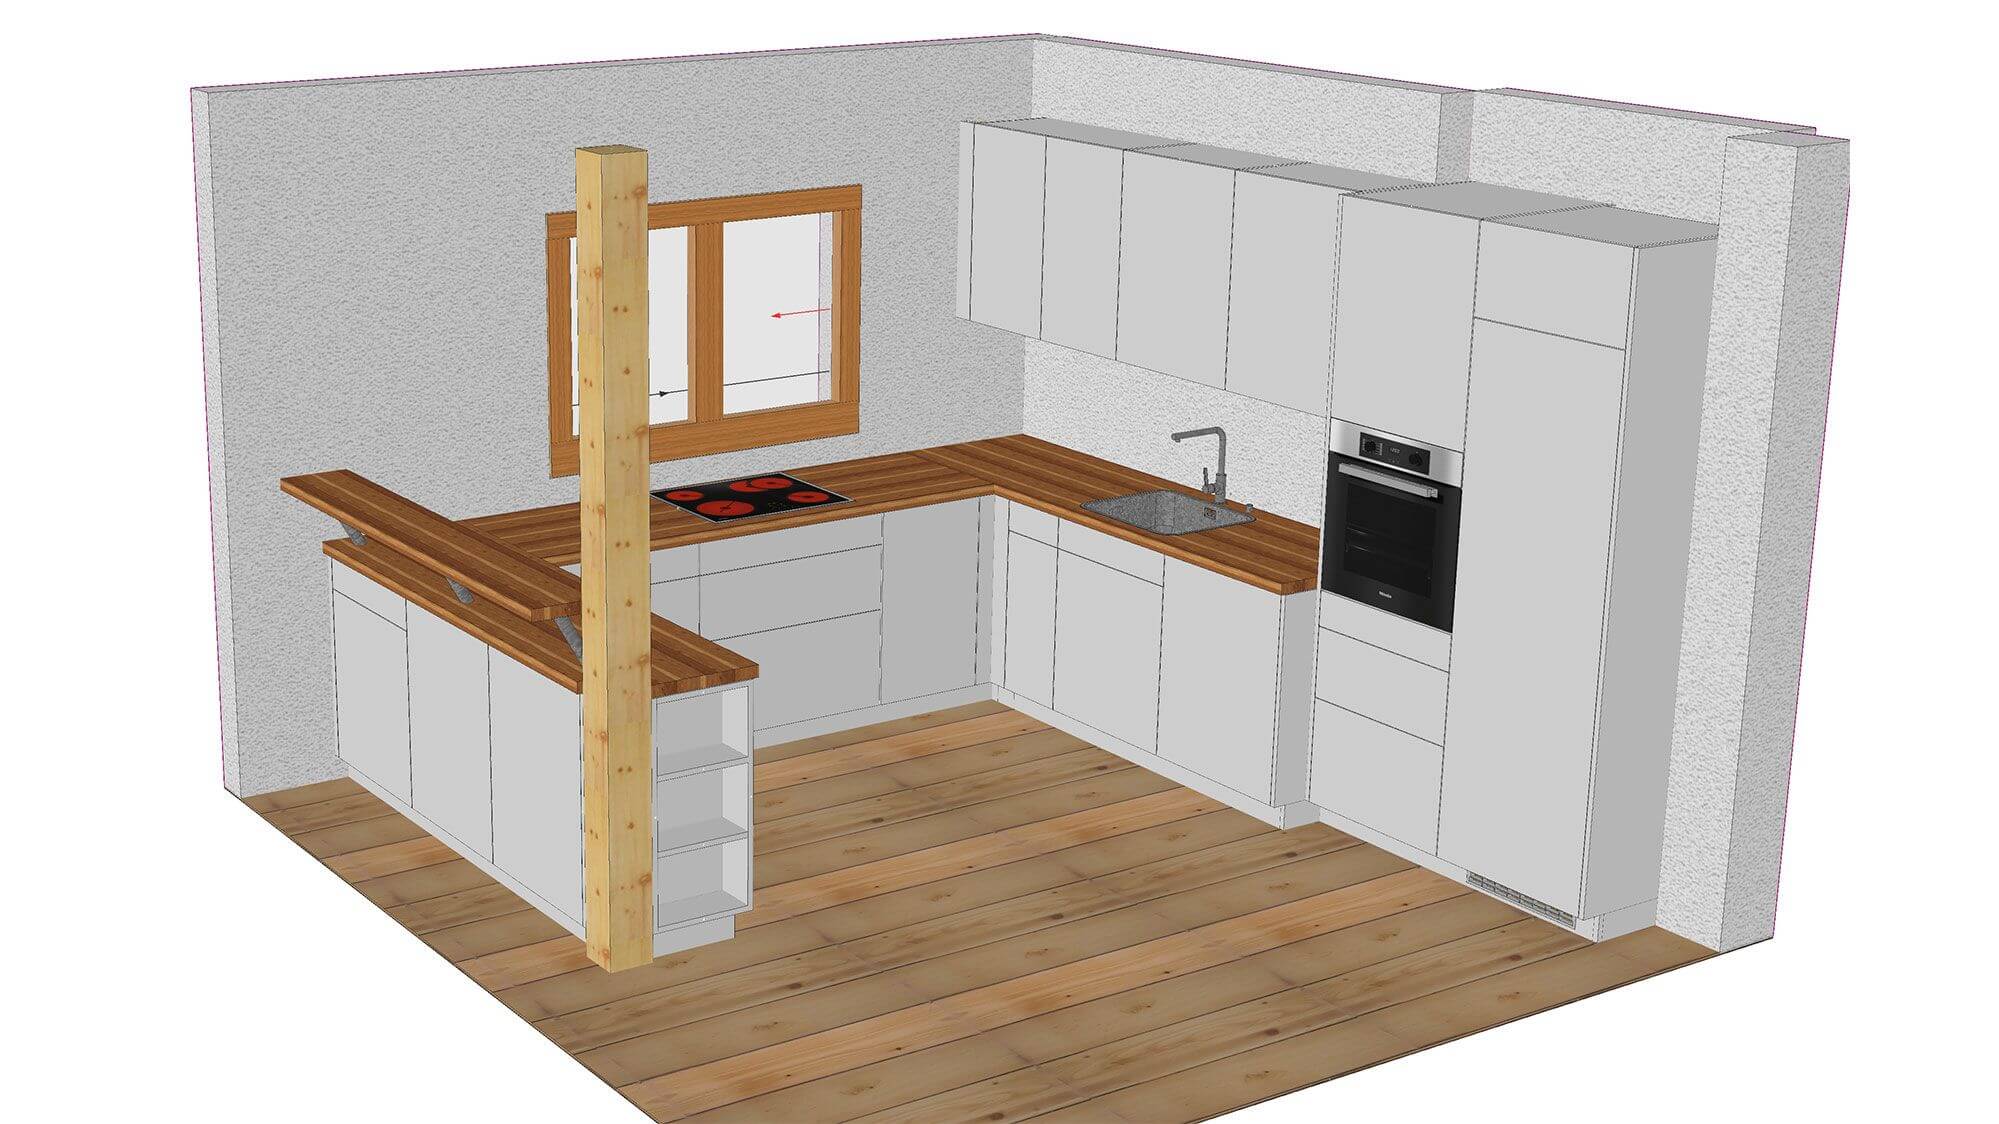 Eilinger Holz Küchenplanung